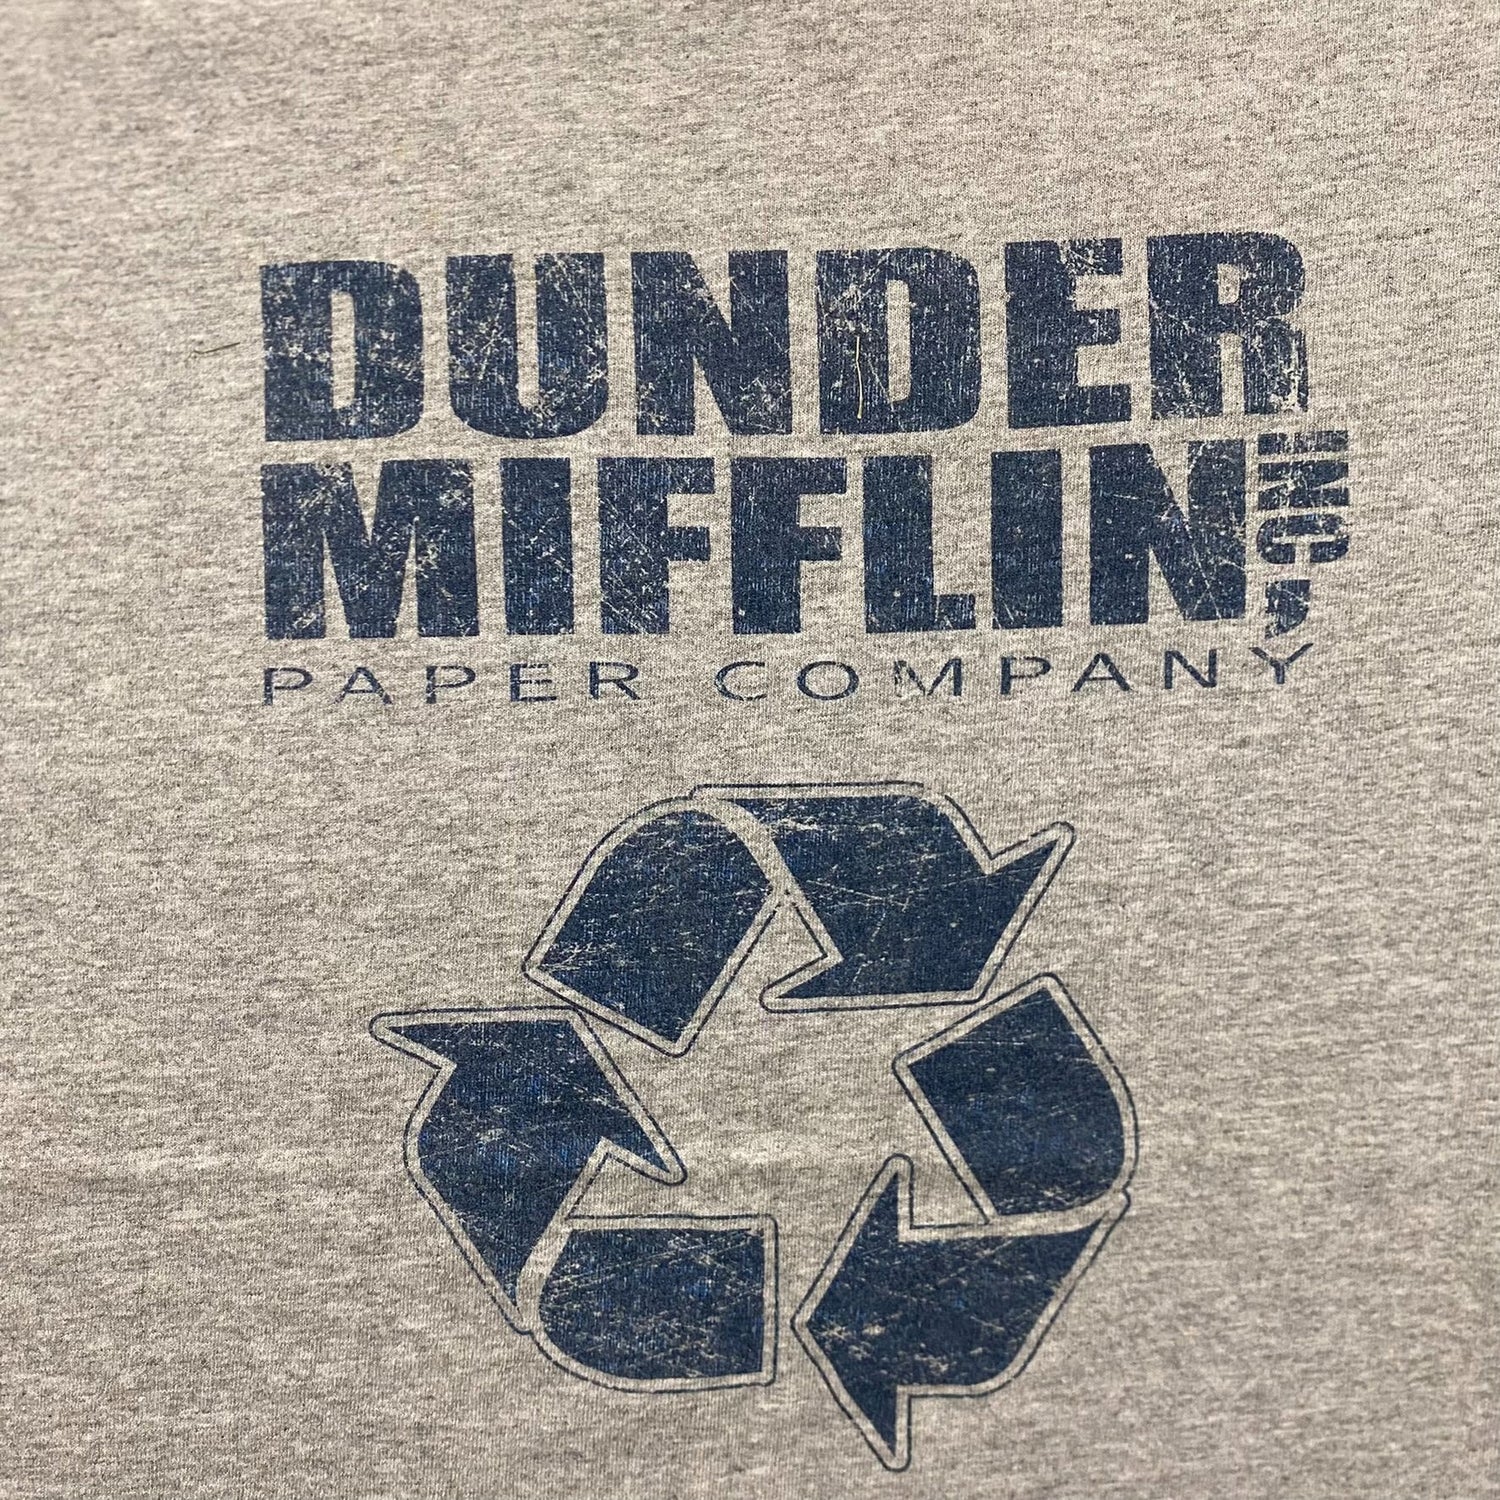 The Office Dunder Mifflin Inc Paper Company Logo T-Shirt 